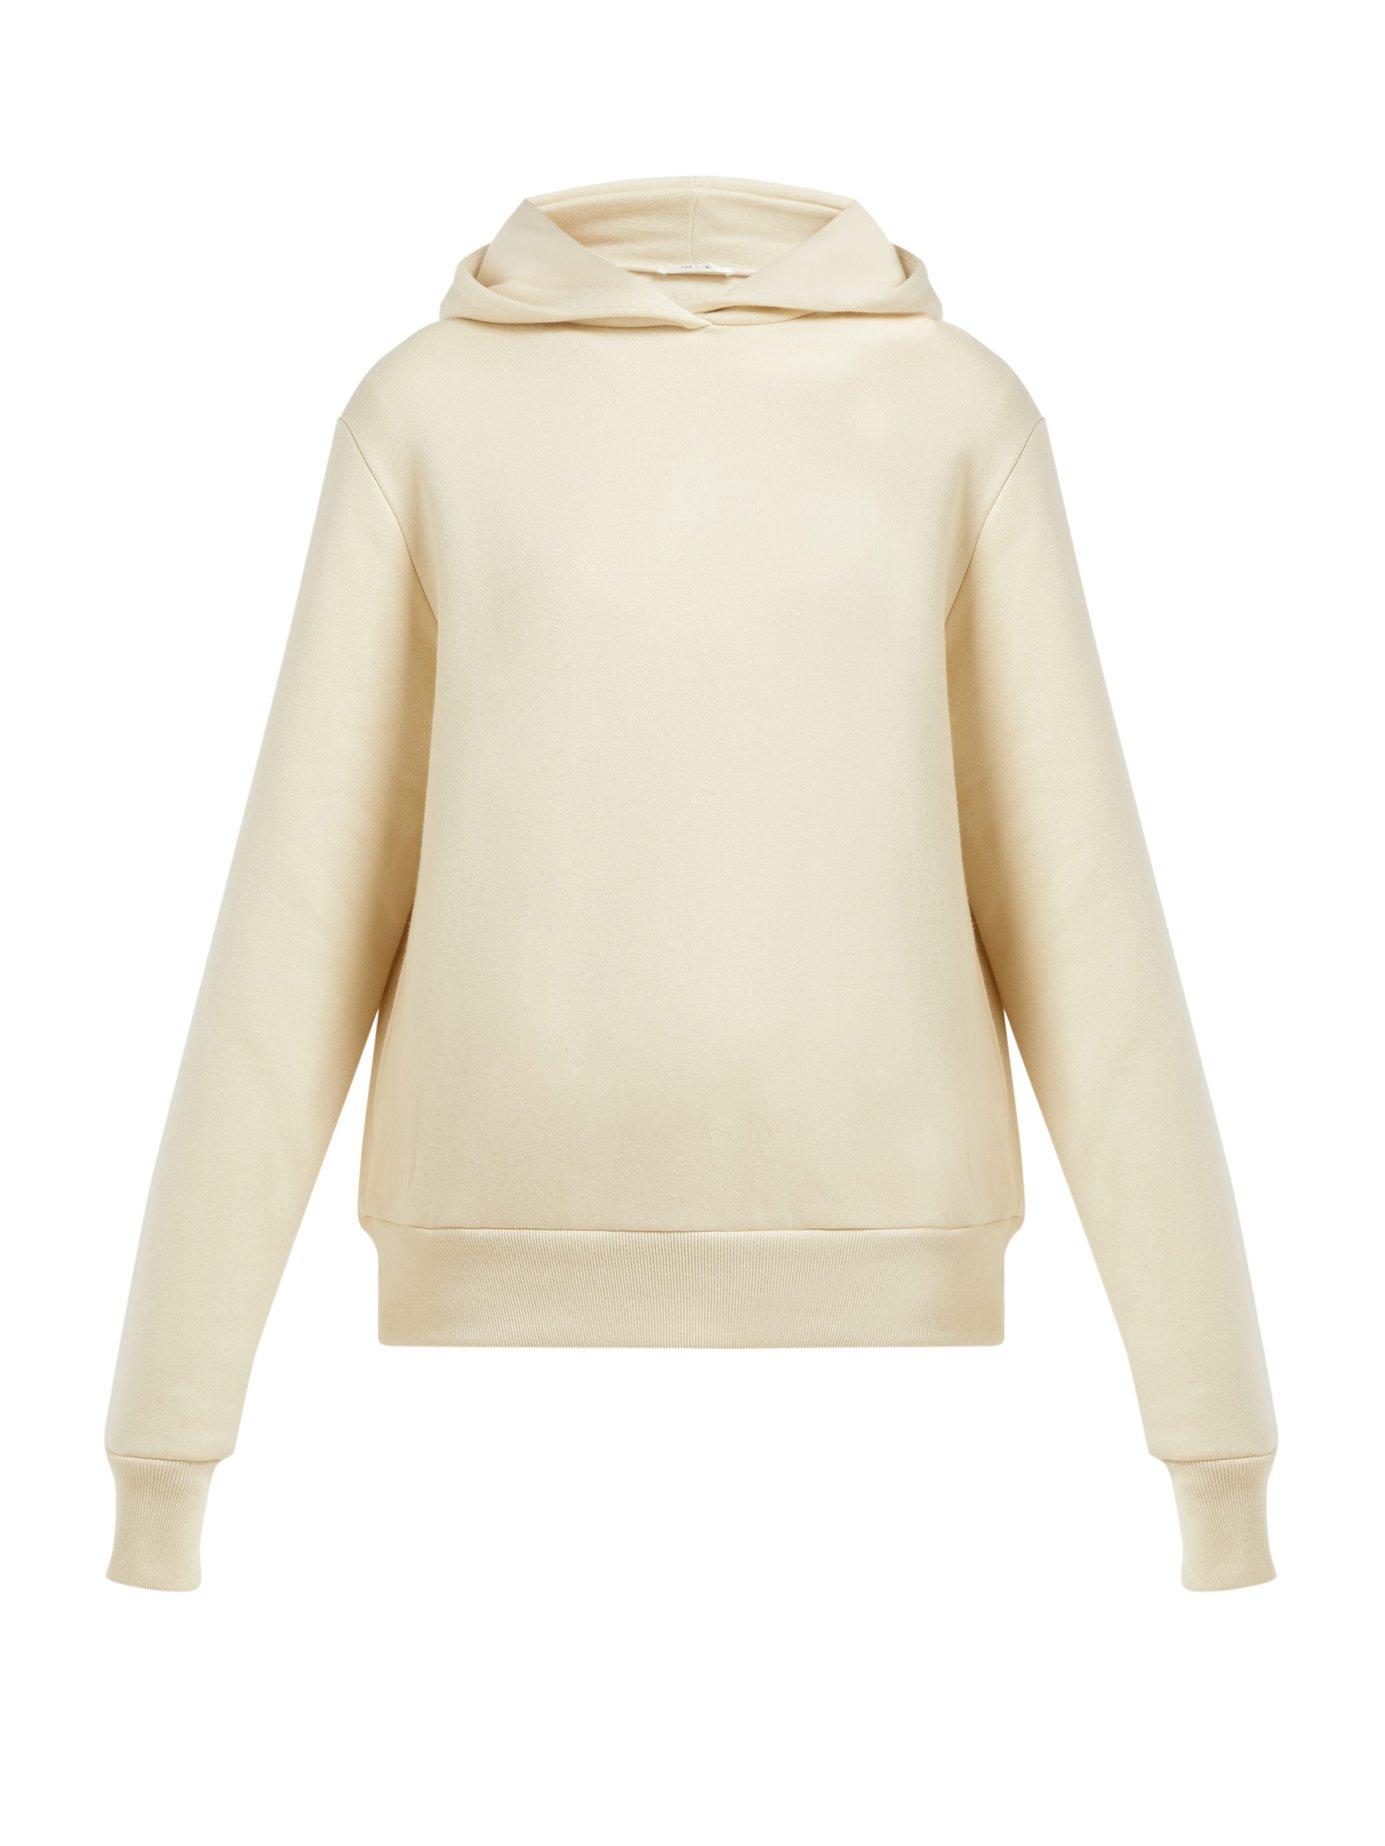 The Row Wren Hooded Cotton Sweatshirt in Cream (Natural) - Lyst